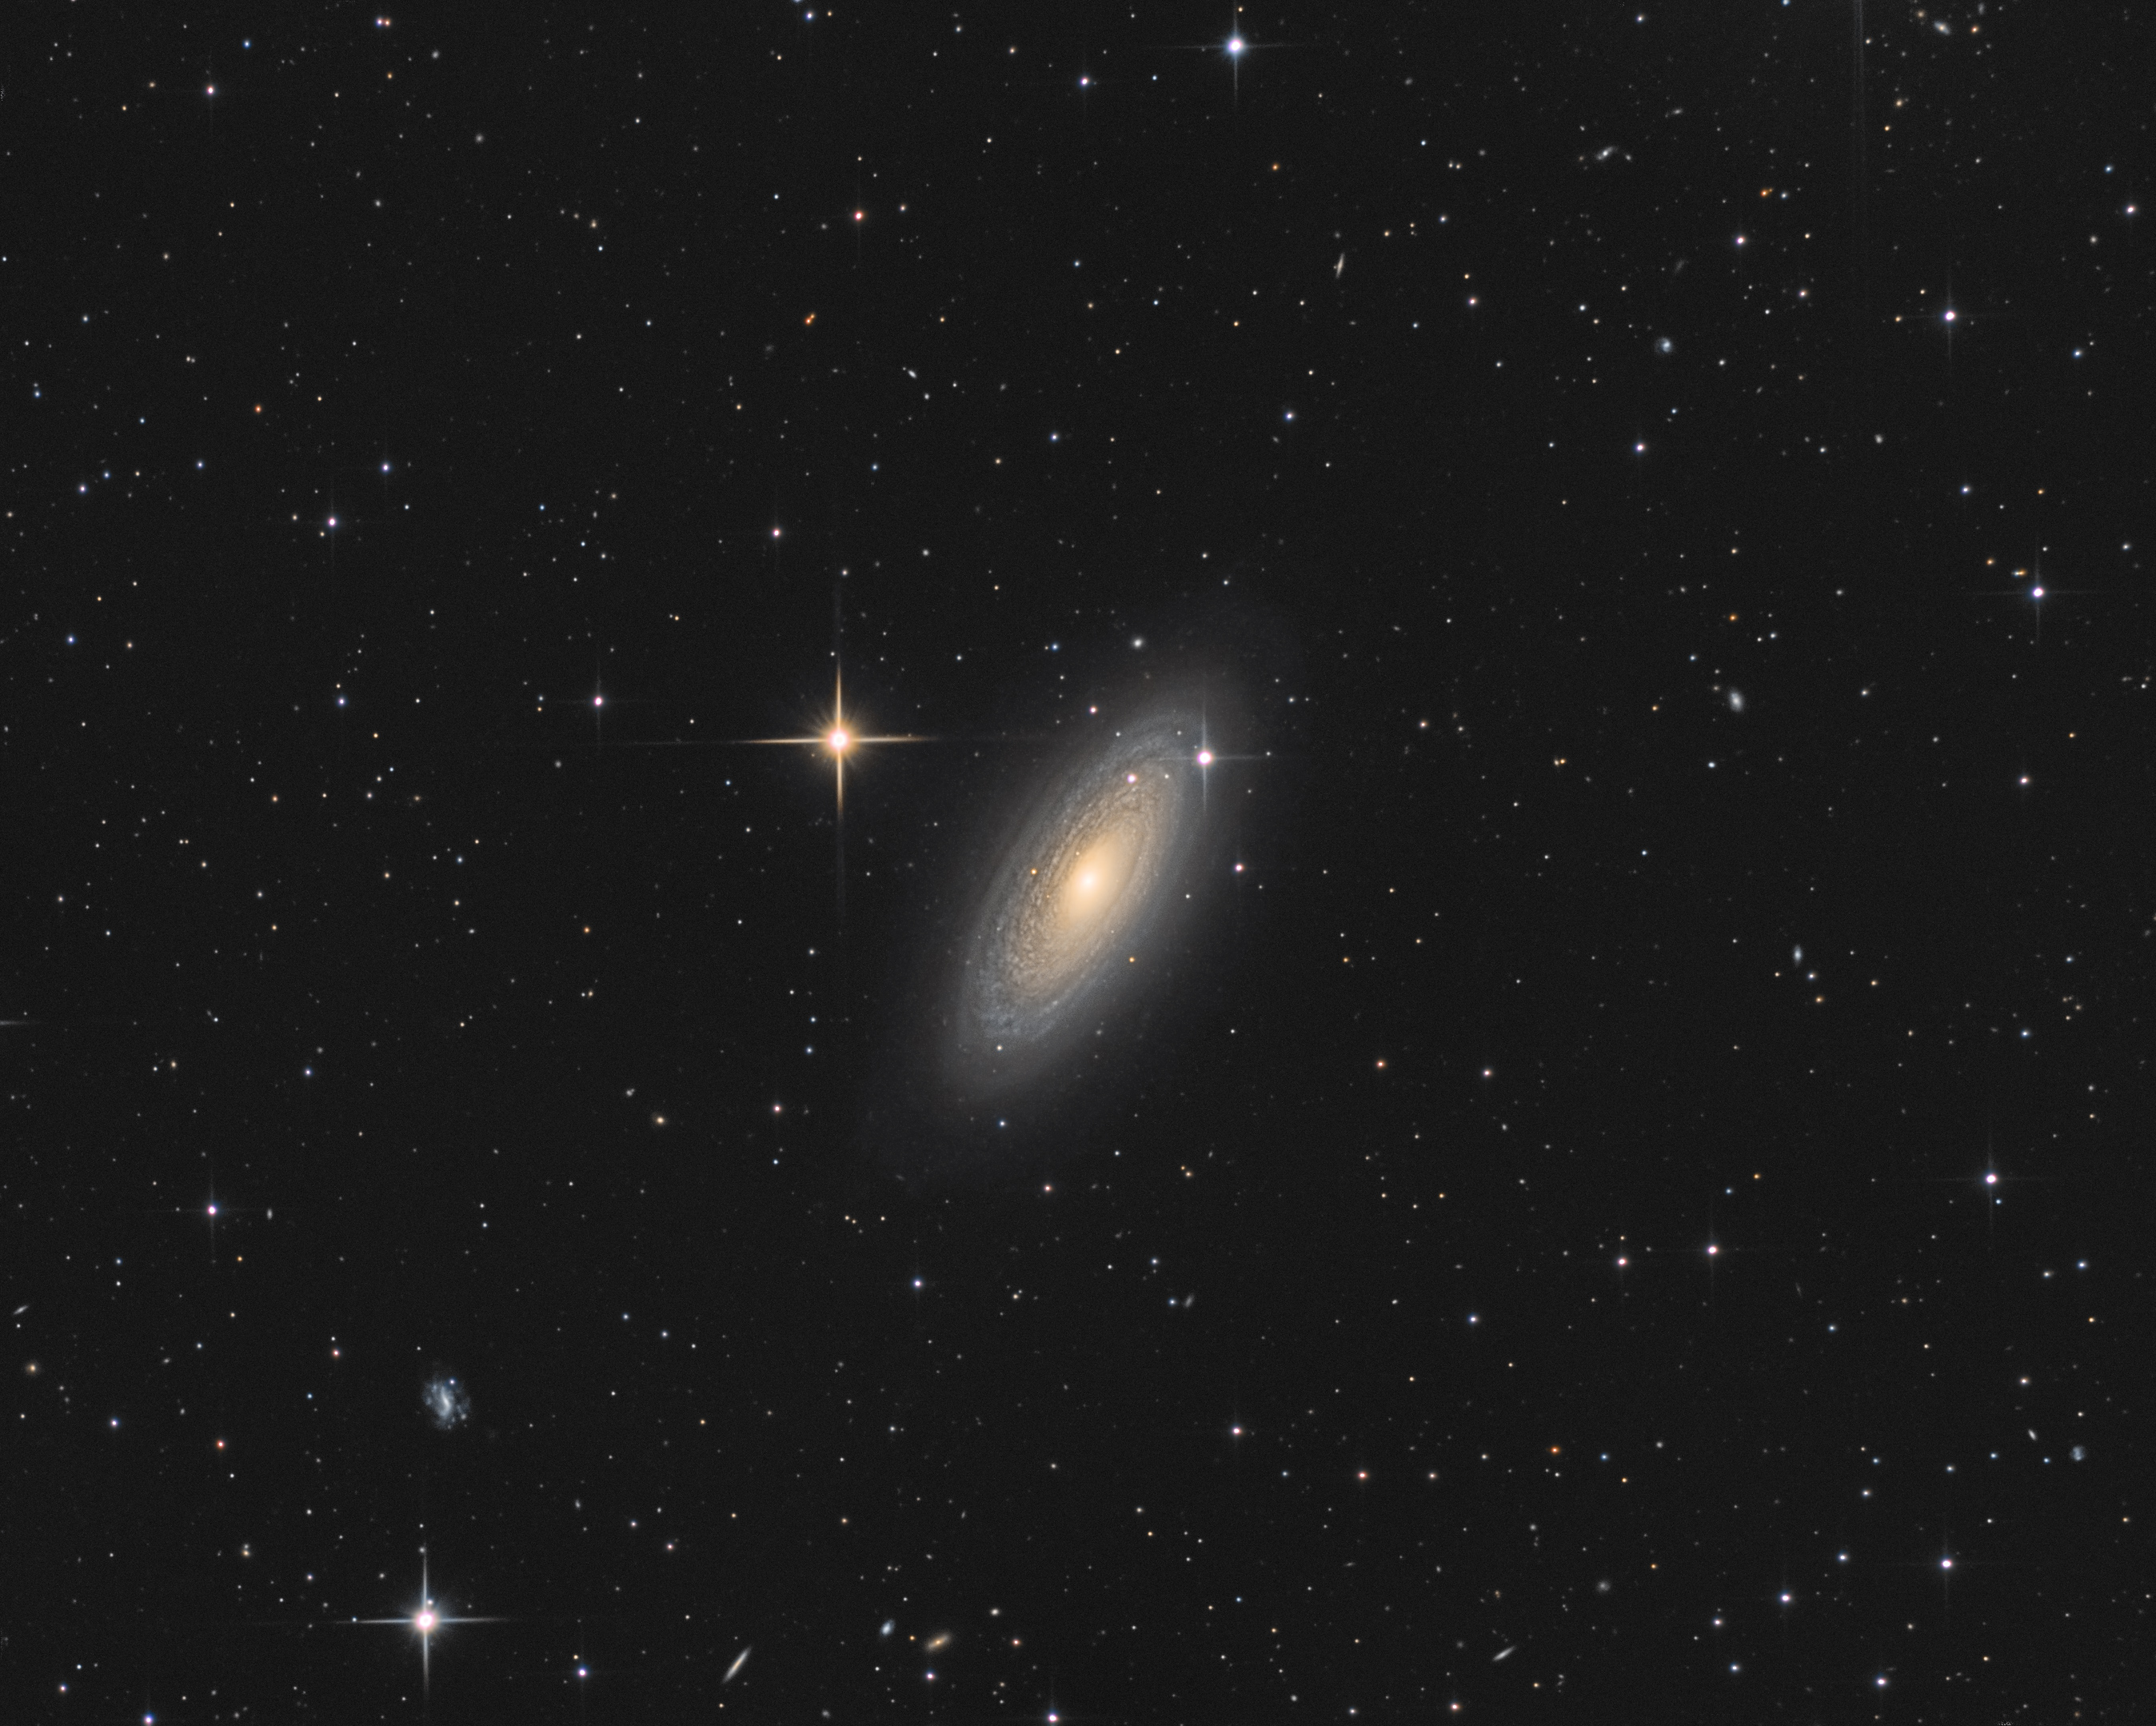 NGC2841 Picture-8fd24604f0618cc62454cc3ff370104b-original